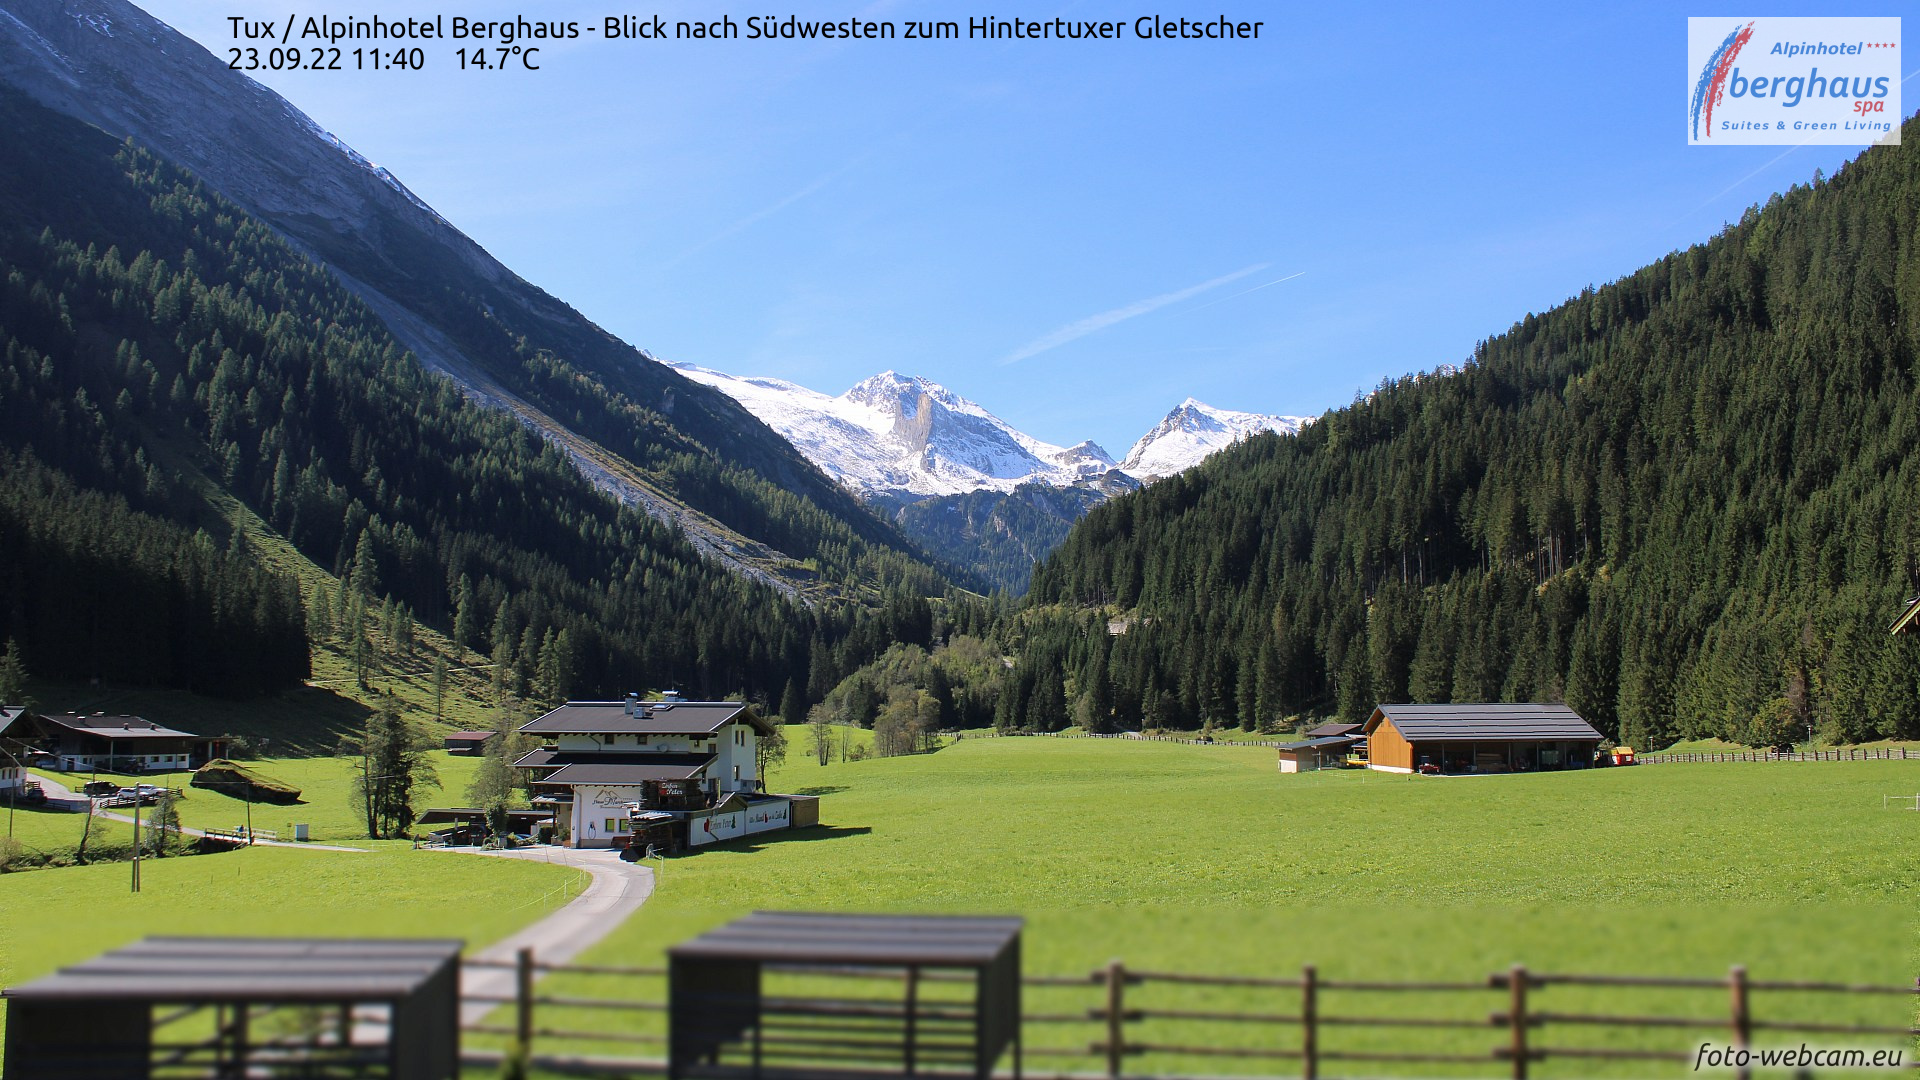 Alpinhotel Berghaus (1400m) Háttérben a Hintertux gleccser